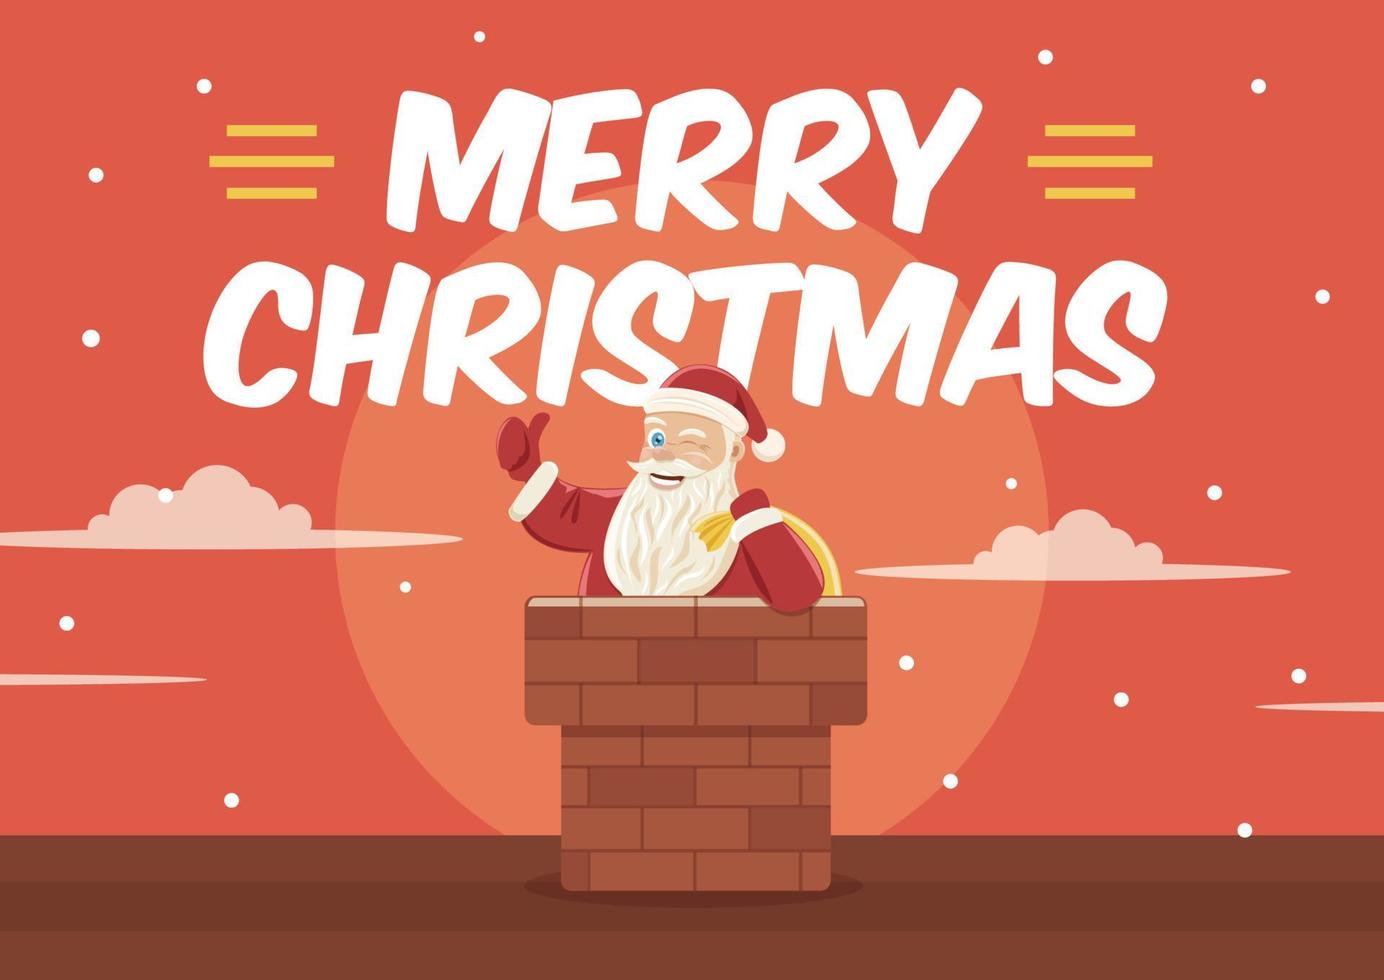 Illustration of Santa claus holding gift bag on chimney vector